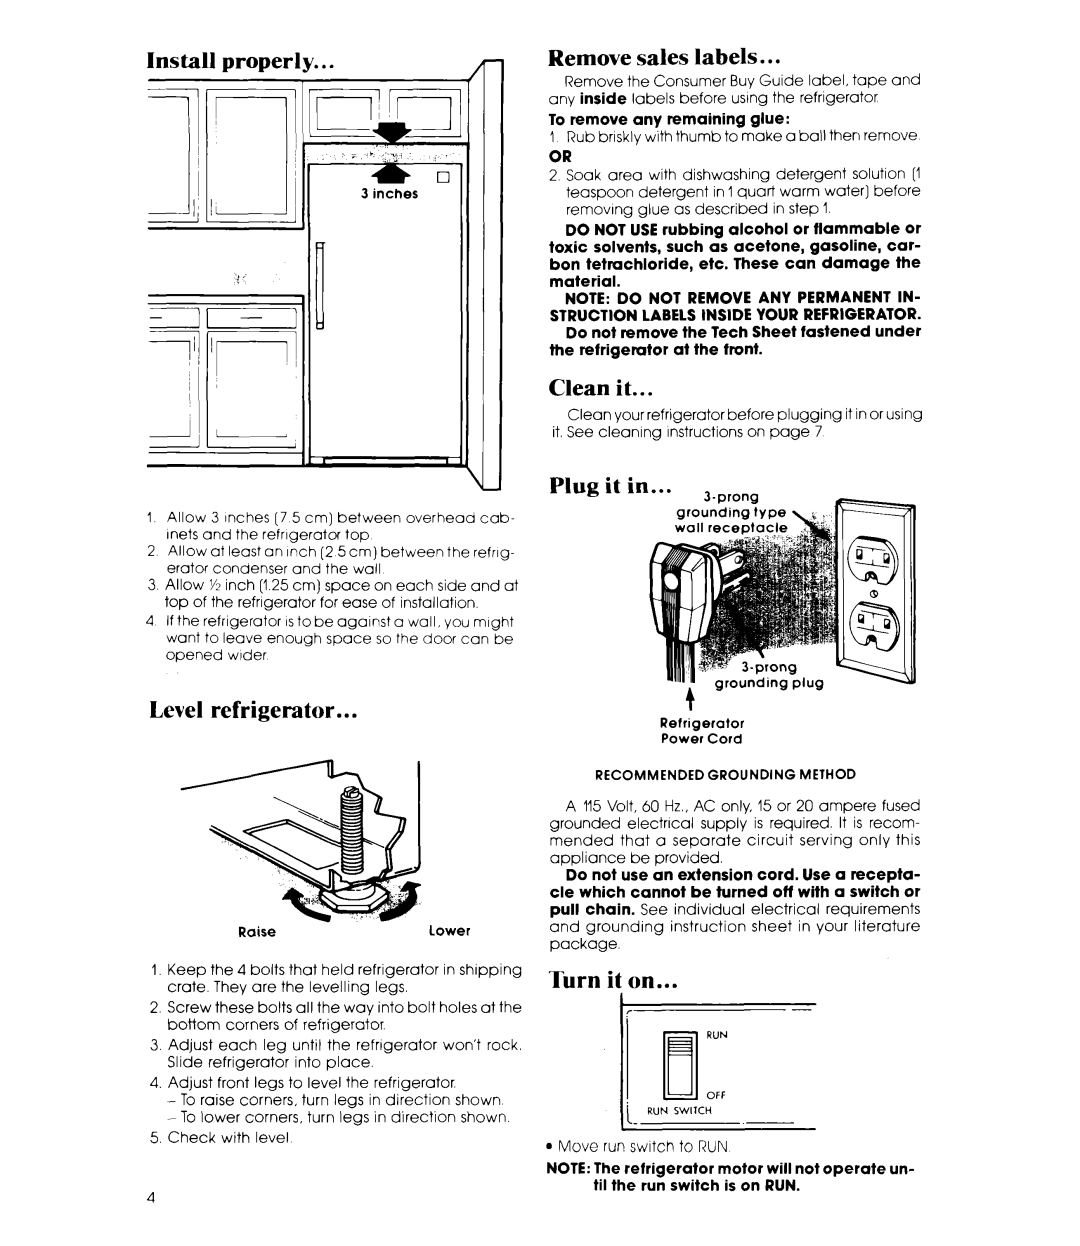 Whirlpool ELl5CCXR manual Install properly, Remove, sales, labels, Level refrigerator, Clean it, Plug it il, Turn it 